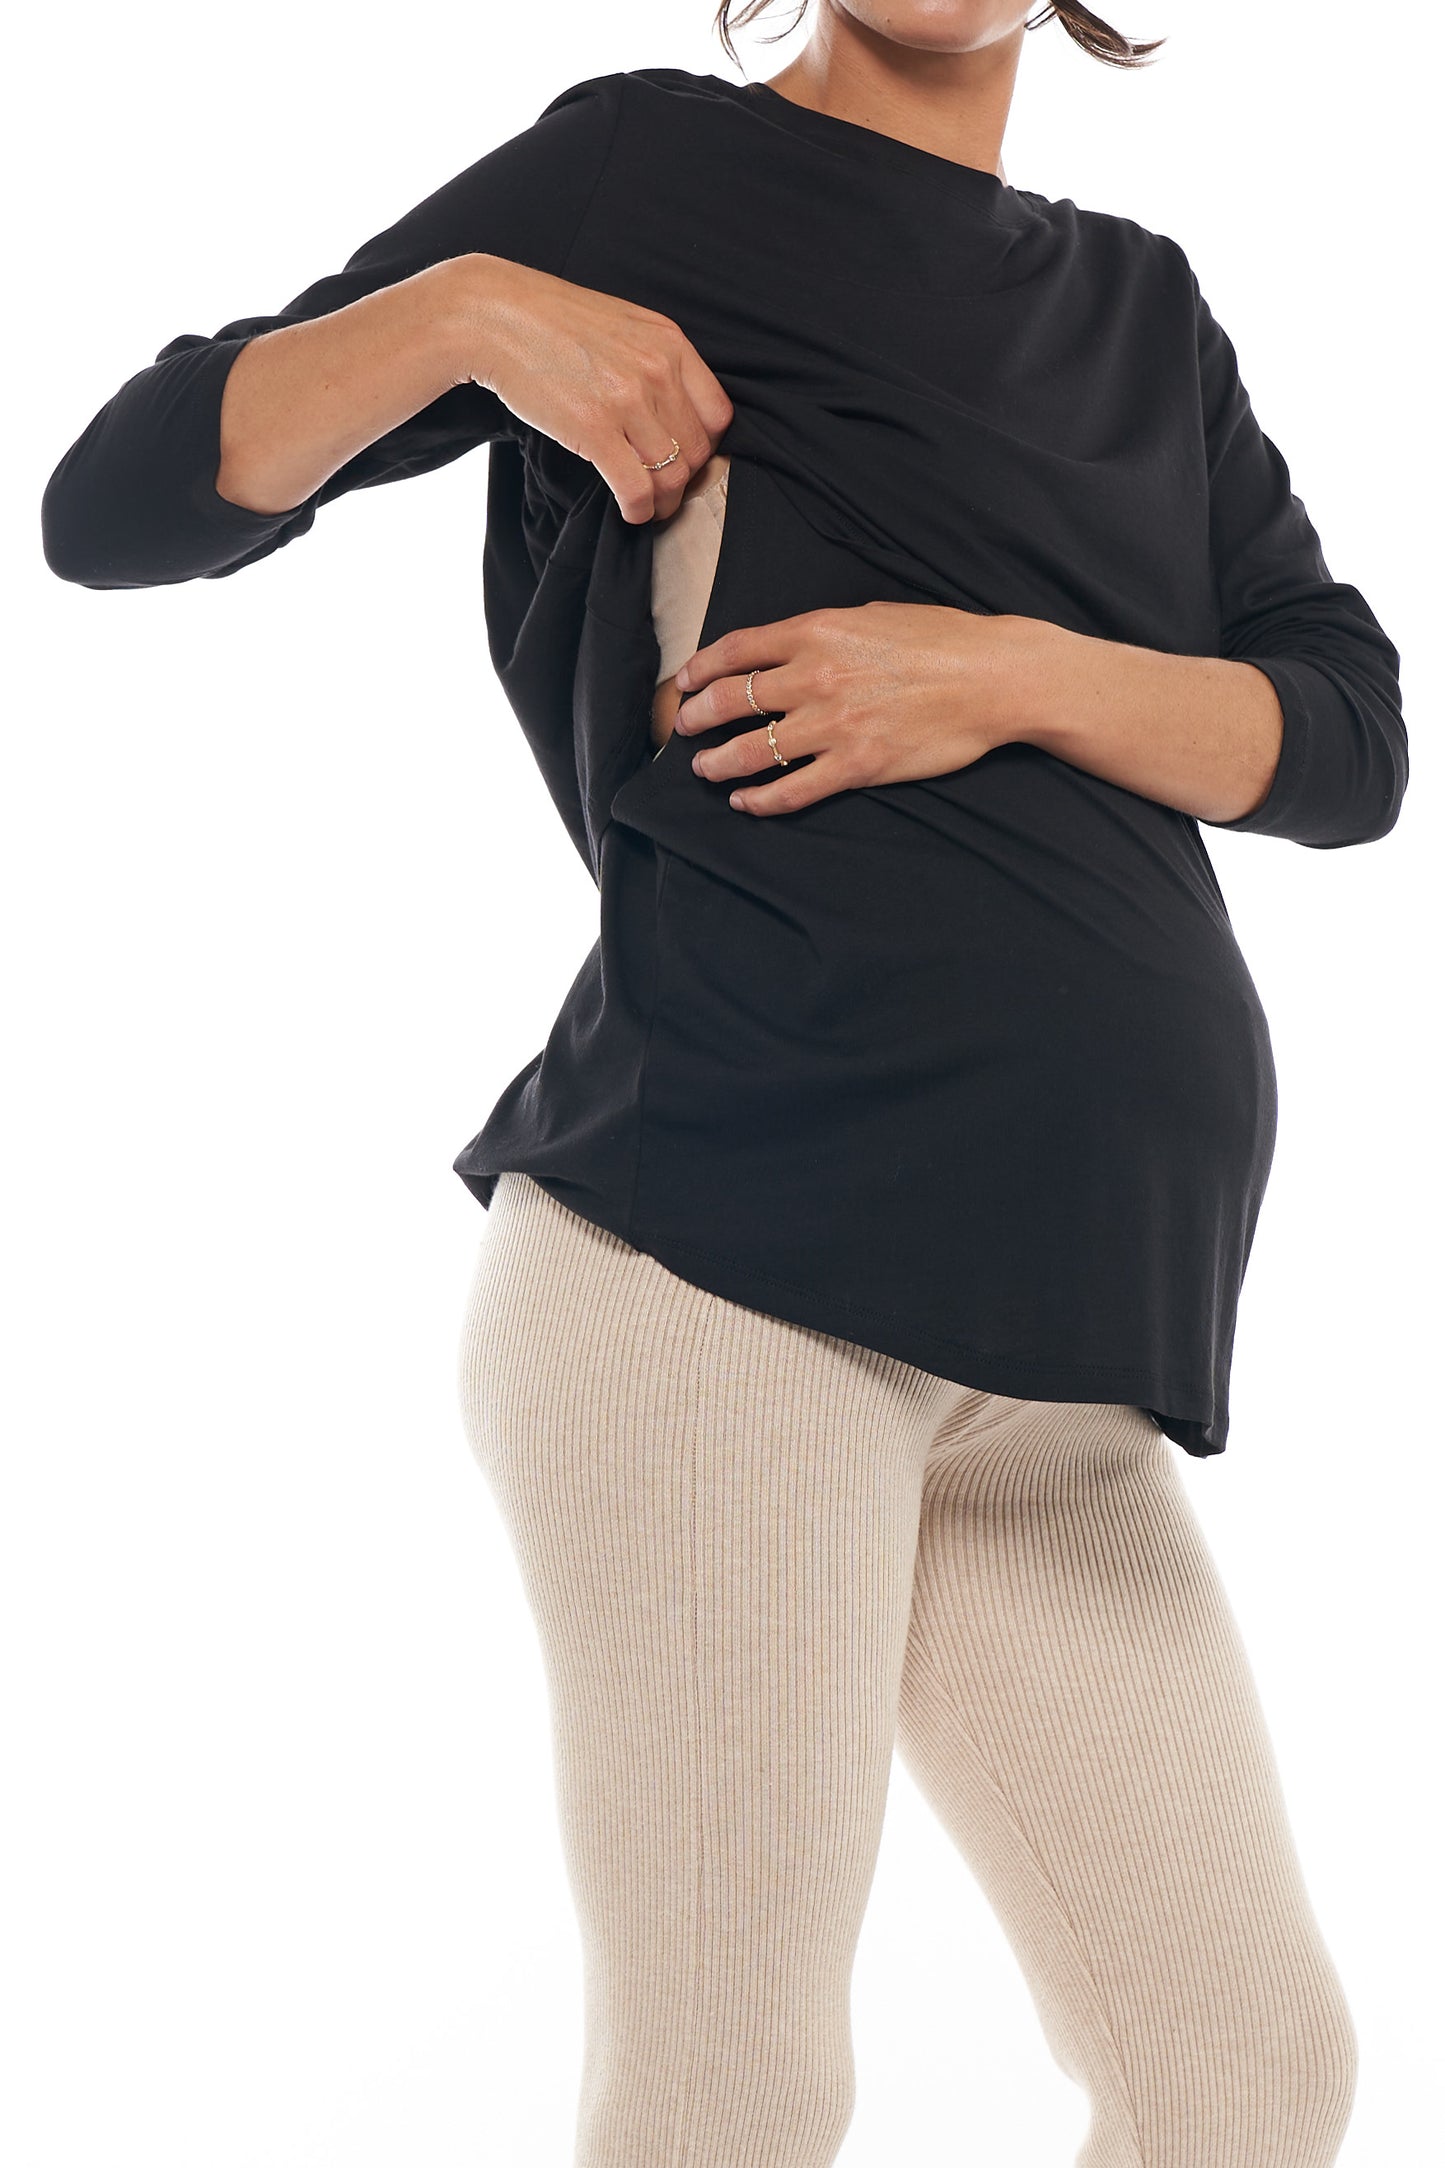 long sleeve maternity top black - image 4